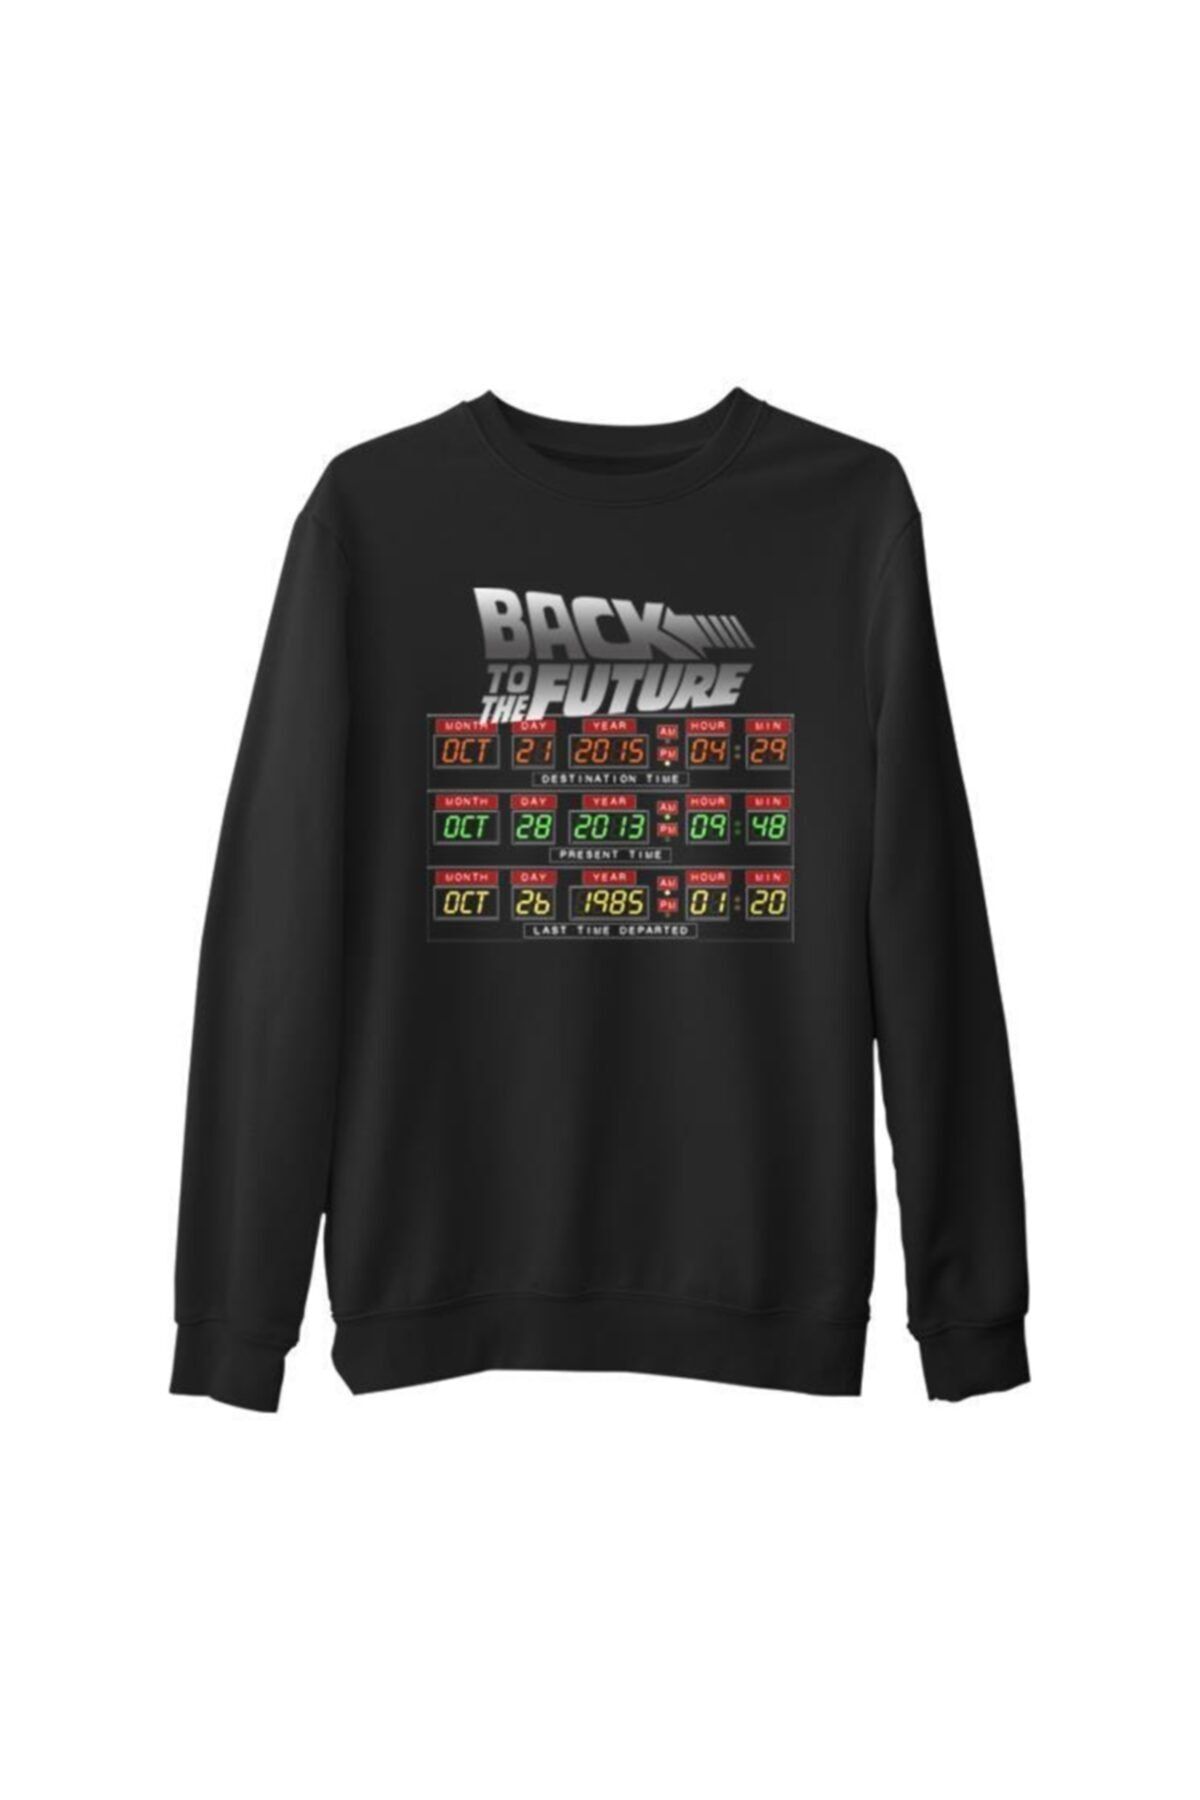 Lord T-Shirt Back To The Future - 21.10.2015 Siyah Erkek Kalın Sweatshirt